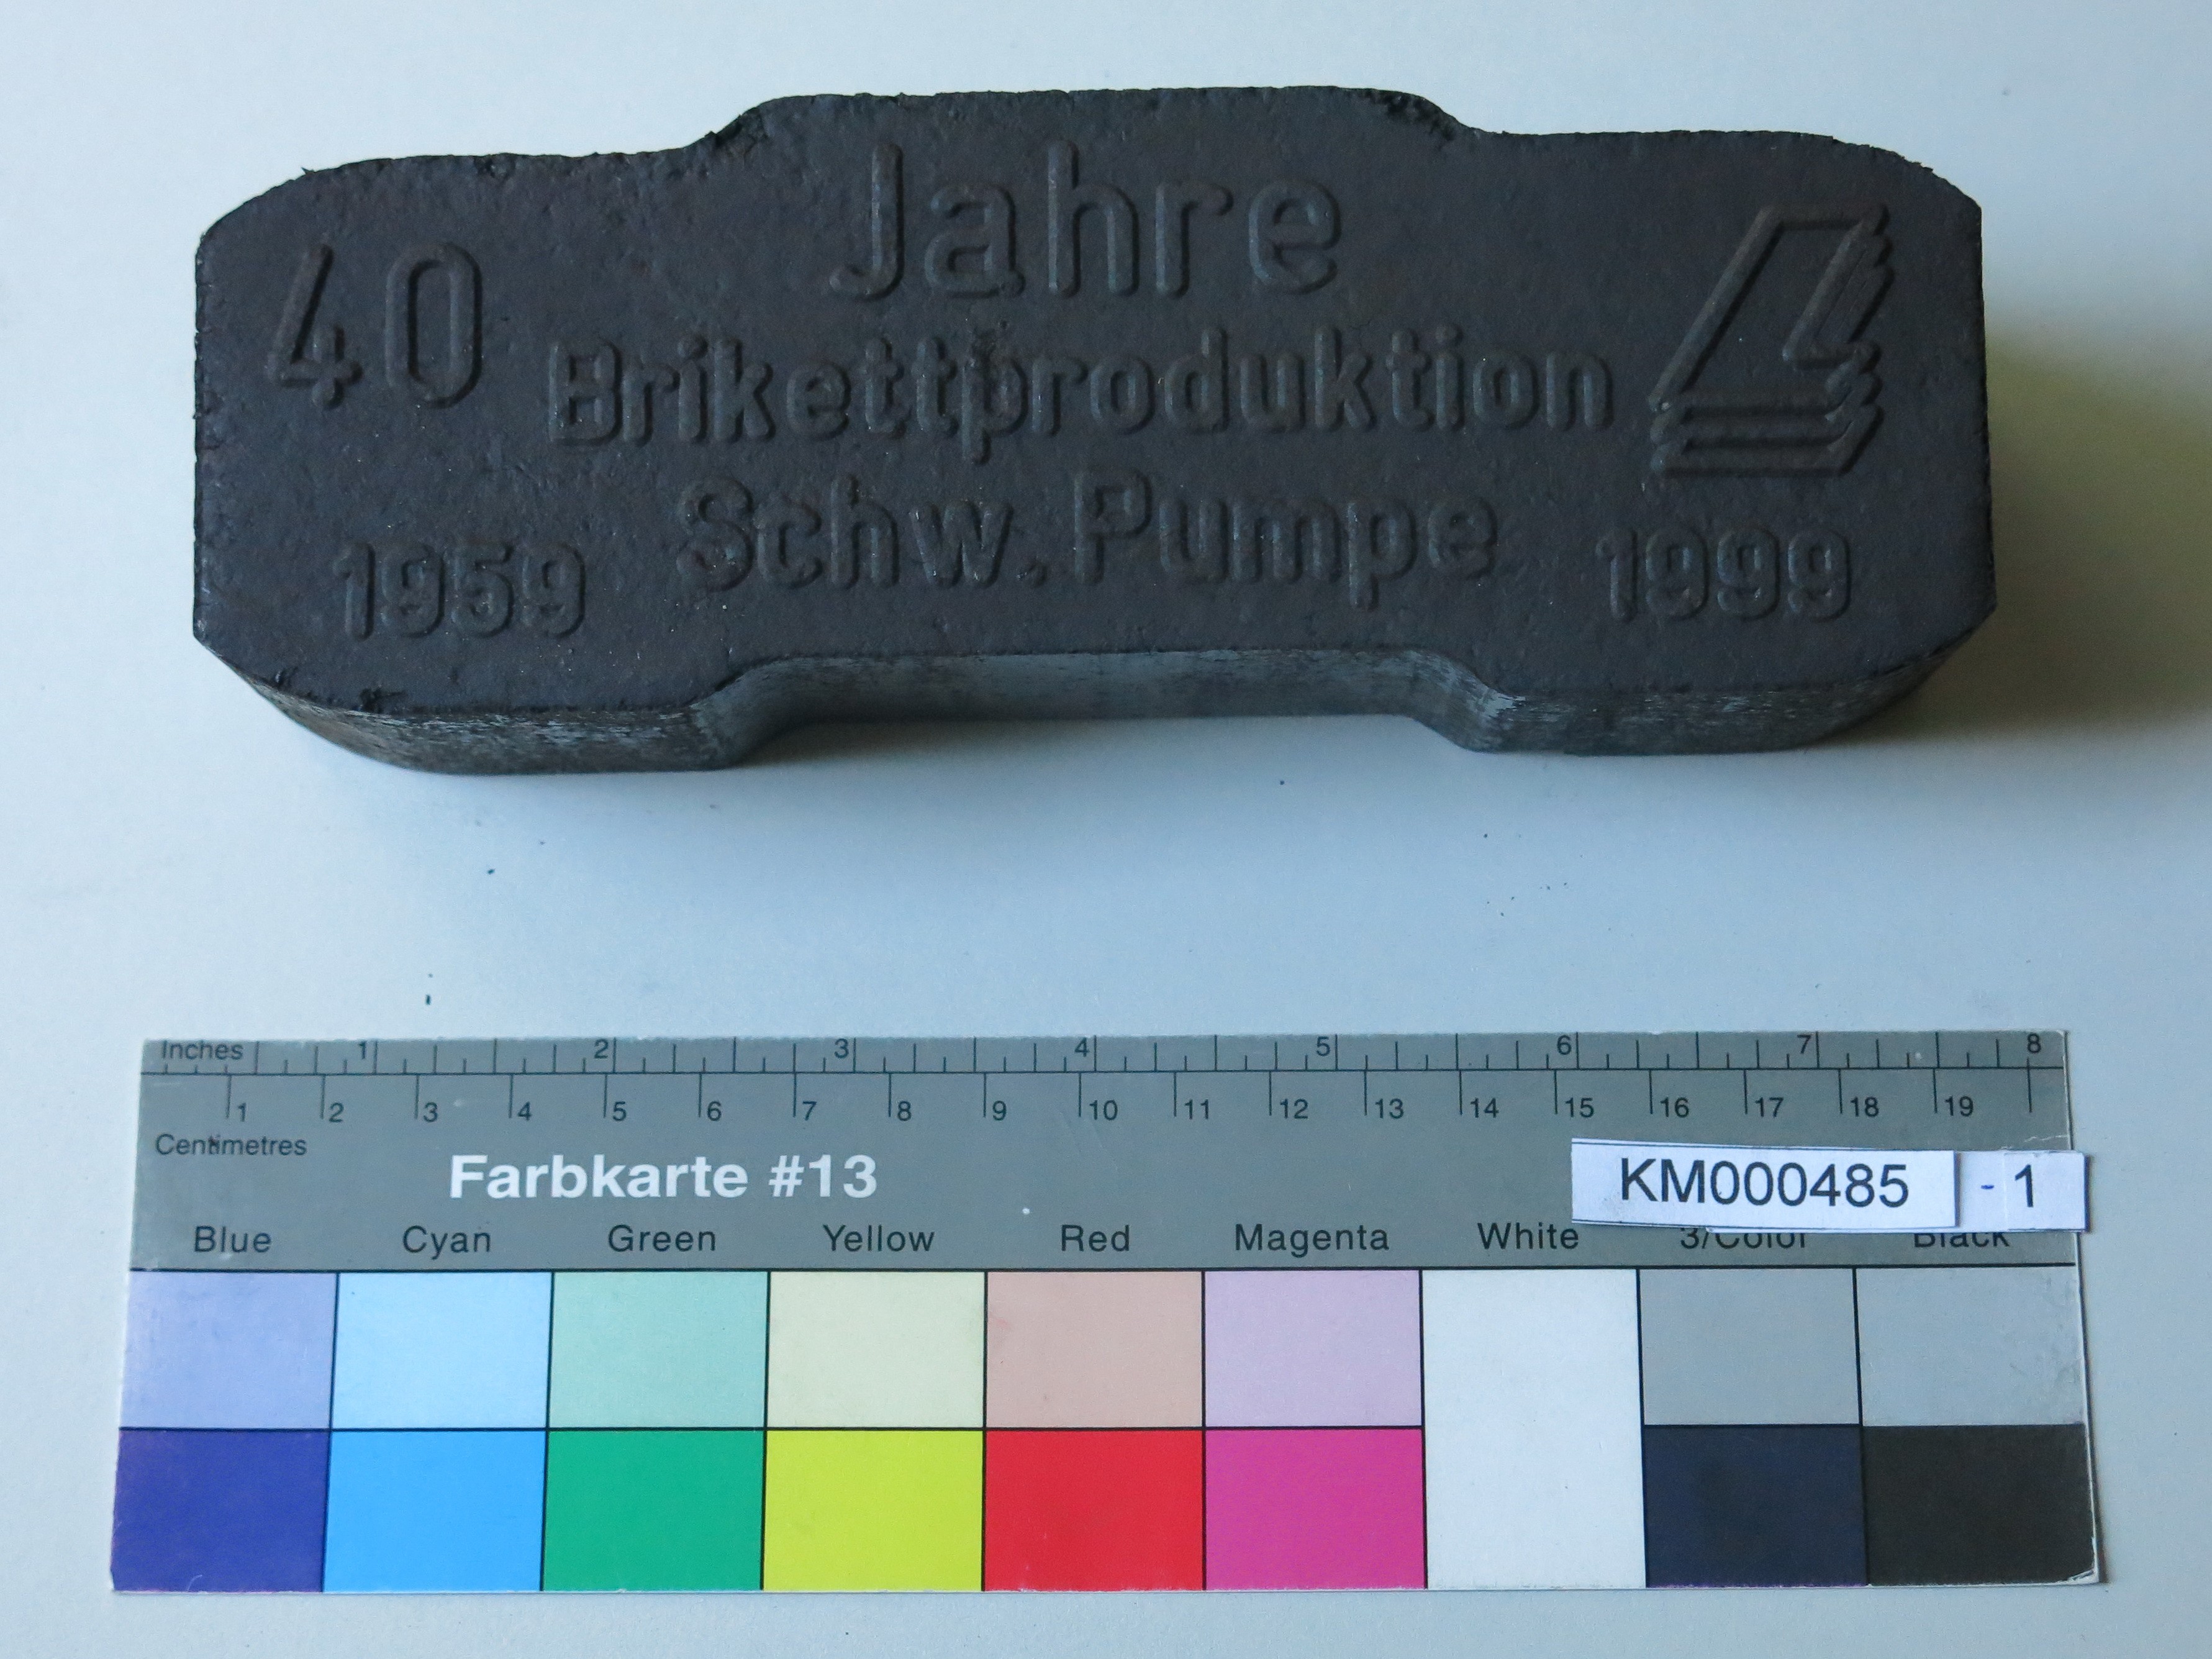 Zierbrikett "40 Jahre Brikettproduktion Schw. Pumpe 1959-1999" (Energiefabrik Knappenrode CC BY-SA)